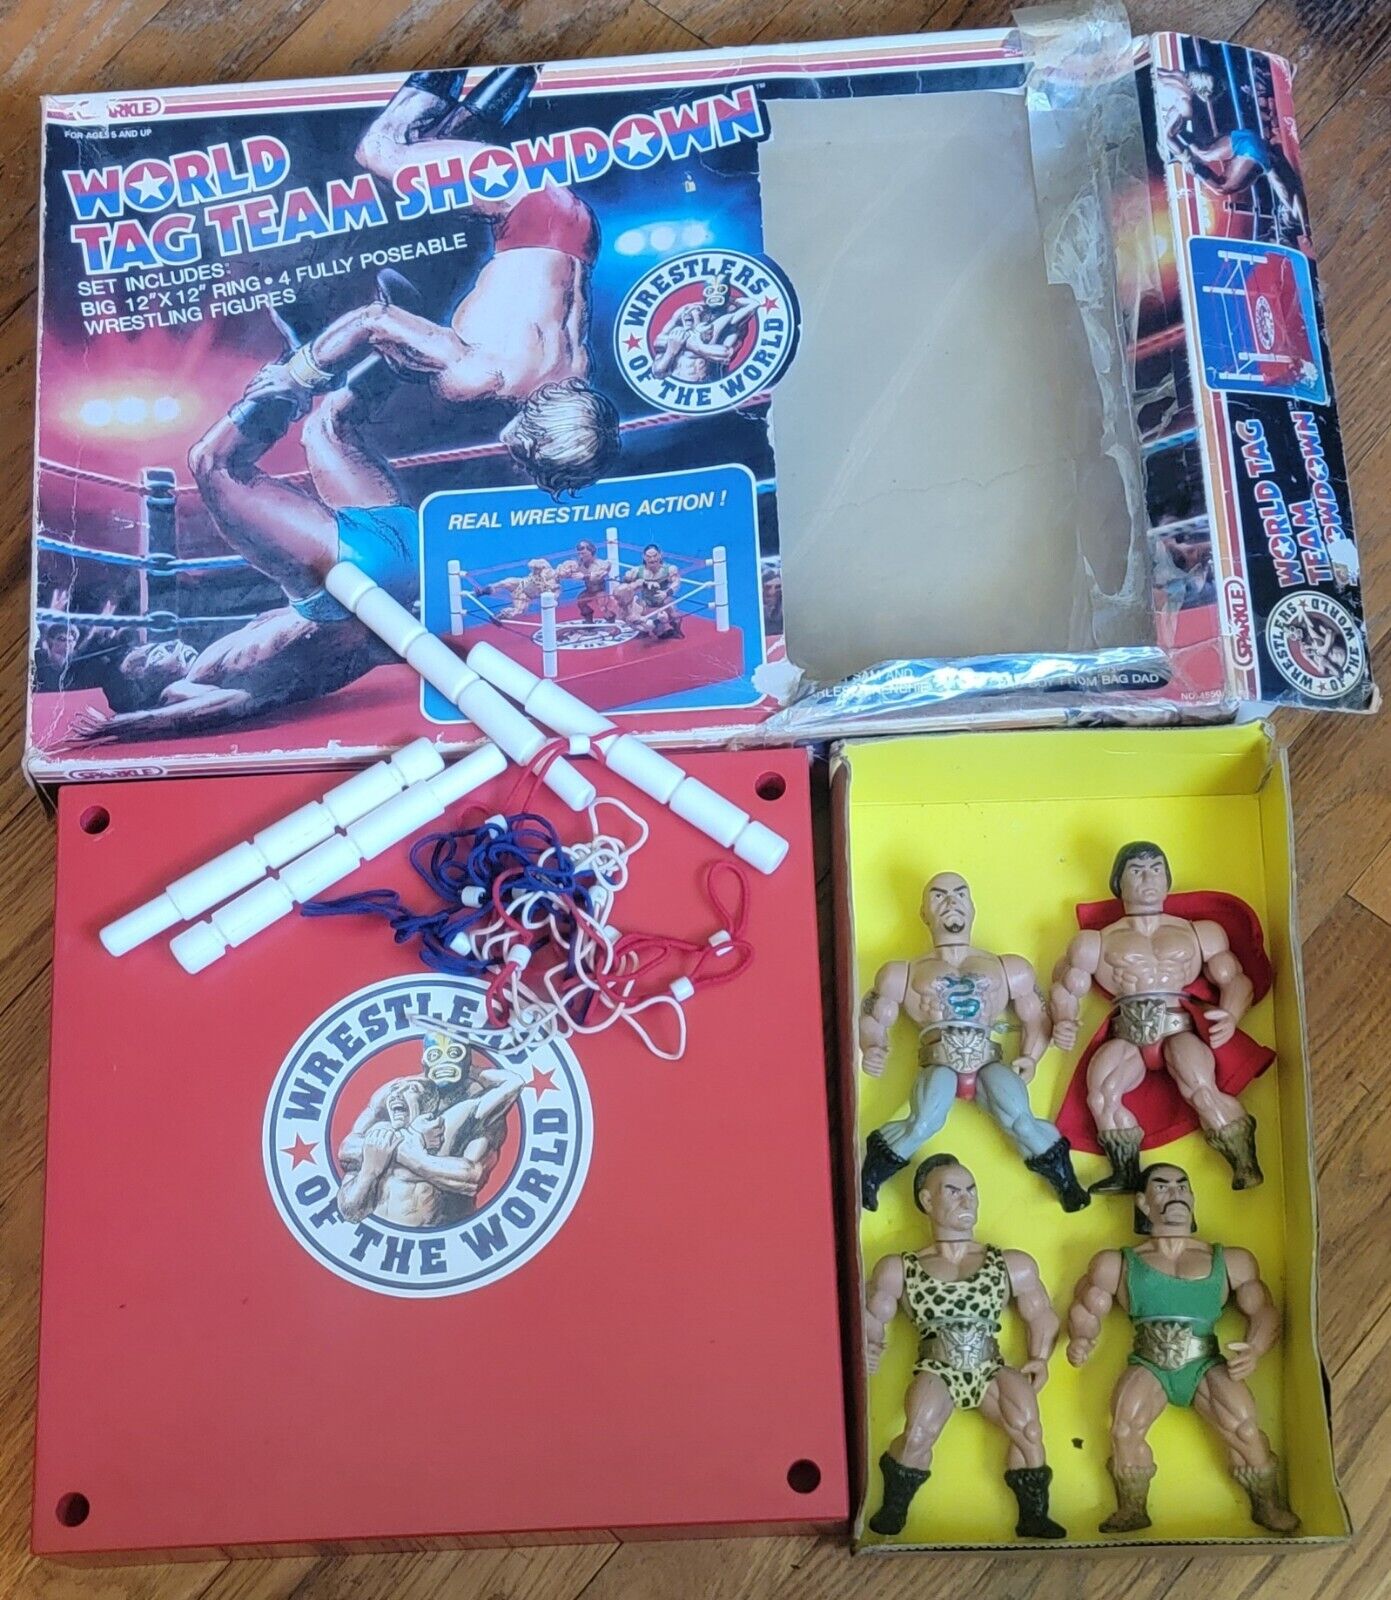 Sparkle Wrestlers of the World Bootleg/Knockoff World Tag Team Showdown Box Set